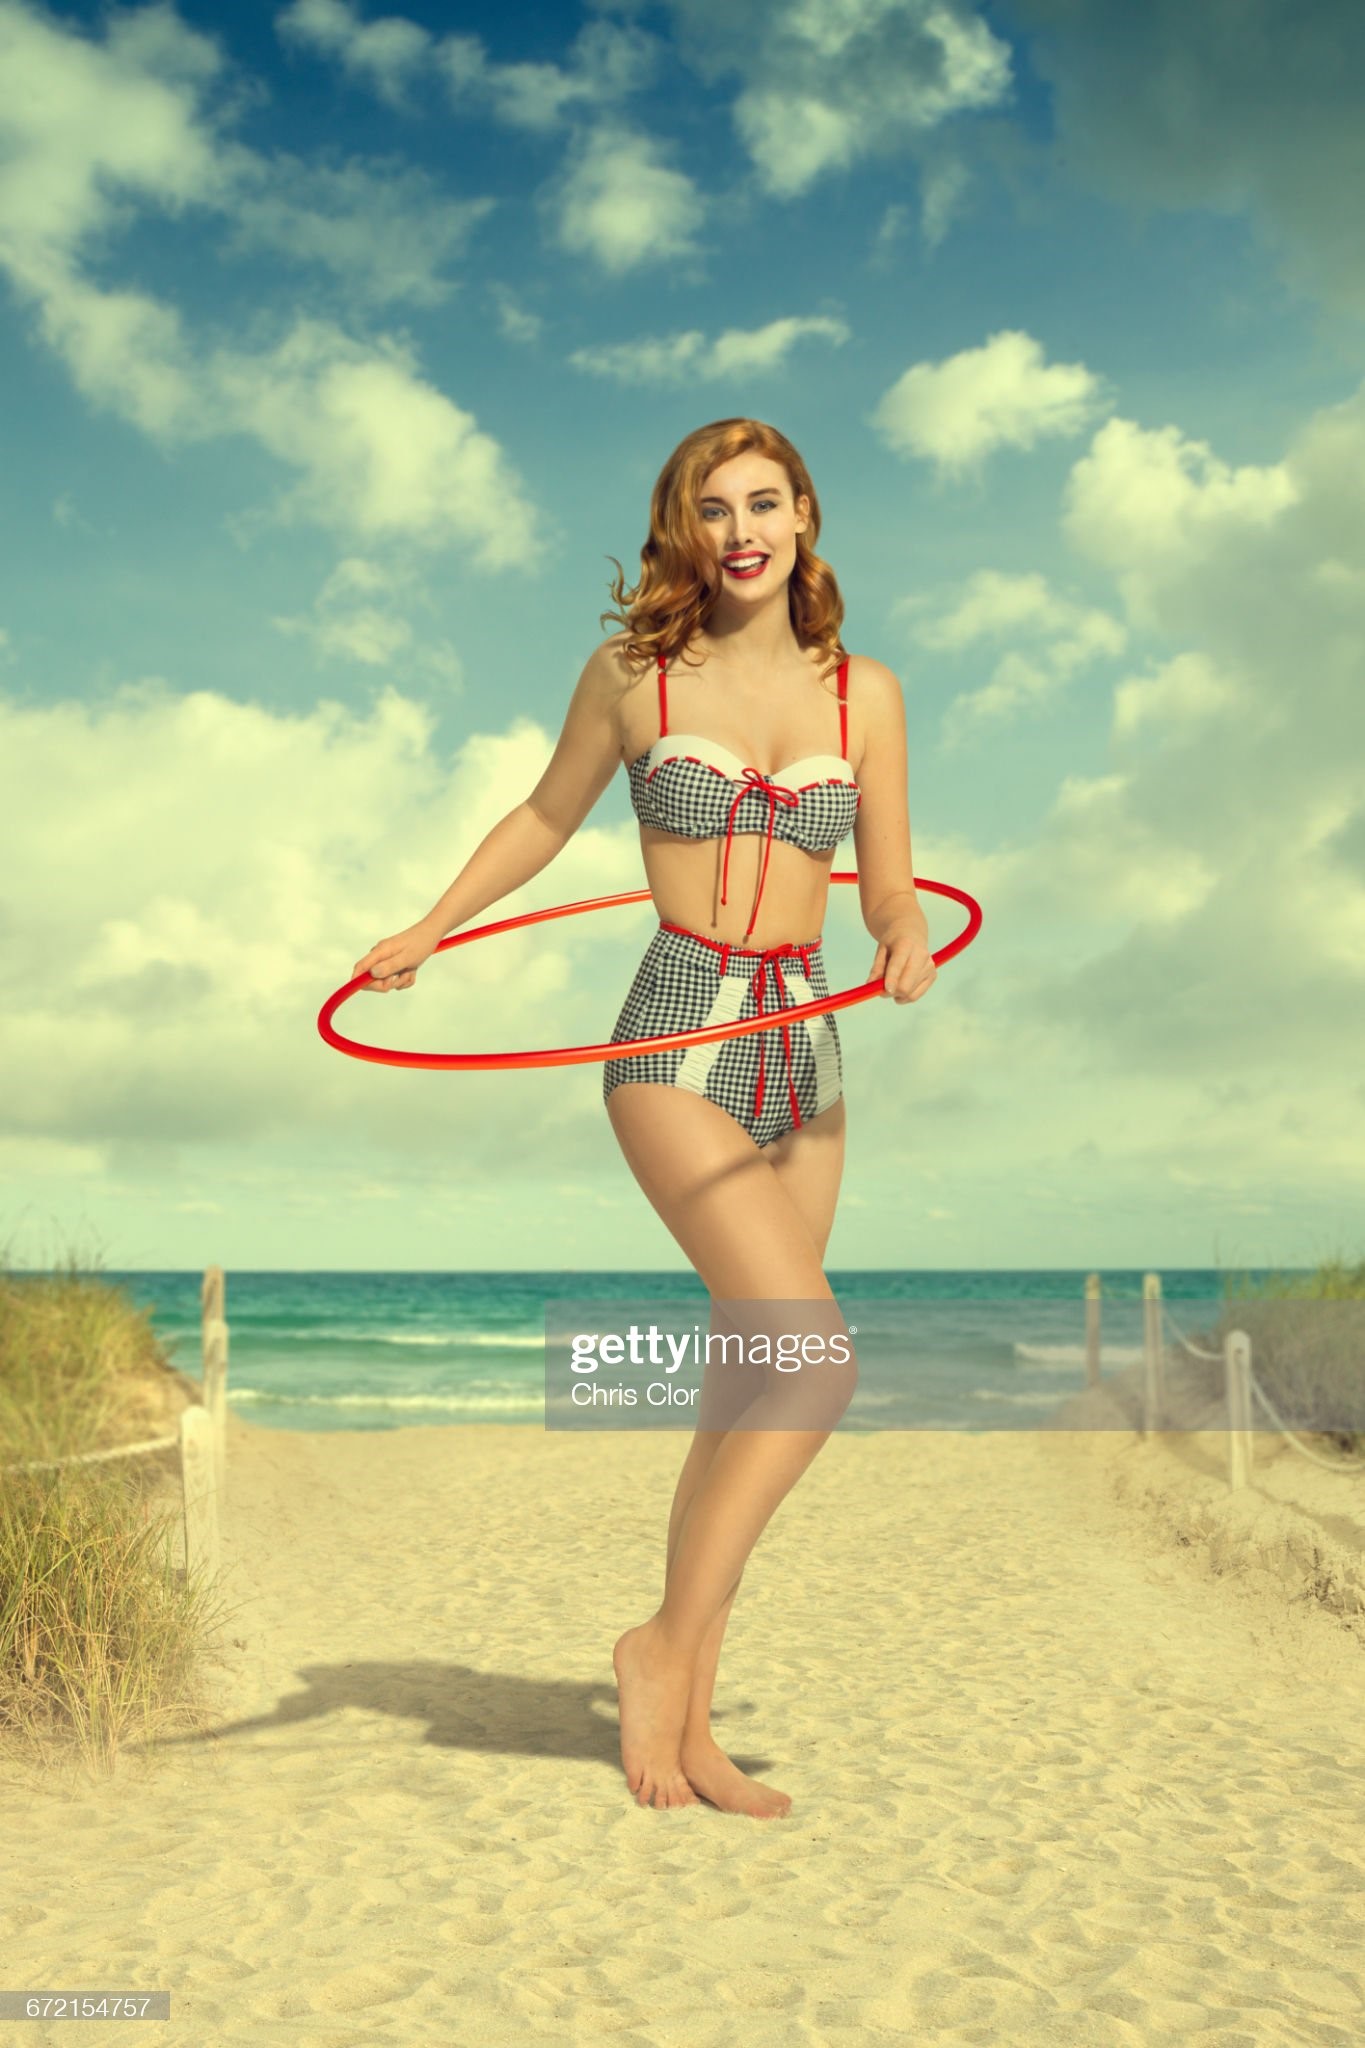 Caucasian woman wearing bikini holding plastic hoop at beach.